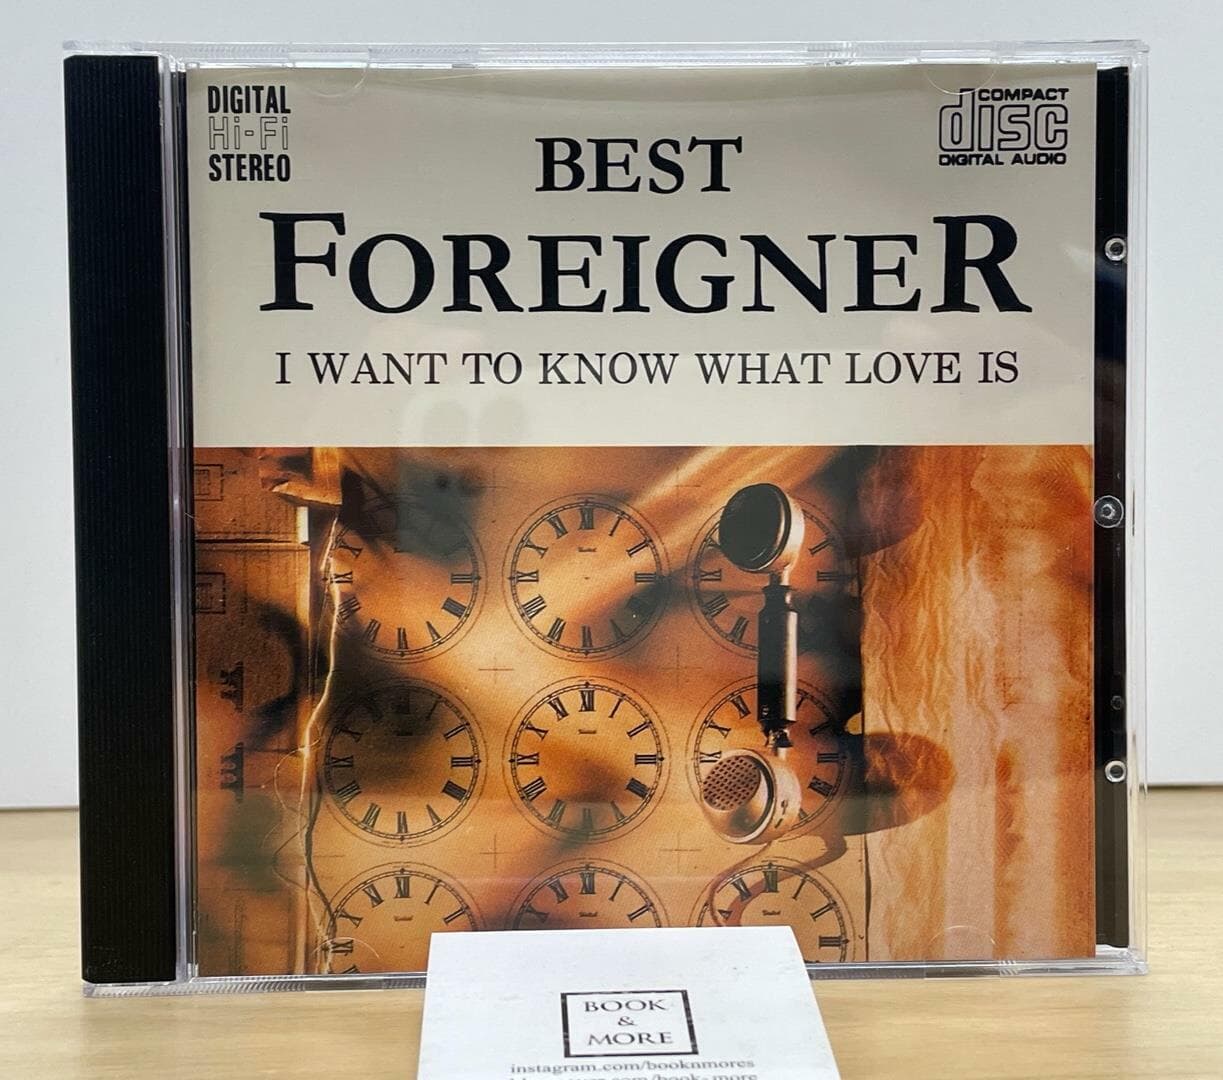 (CD) Foreigner BEST / 한양레코드 / 상태 : 최상 (설명과 사진 참고)